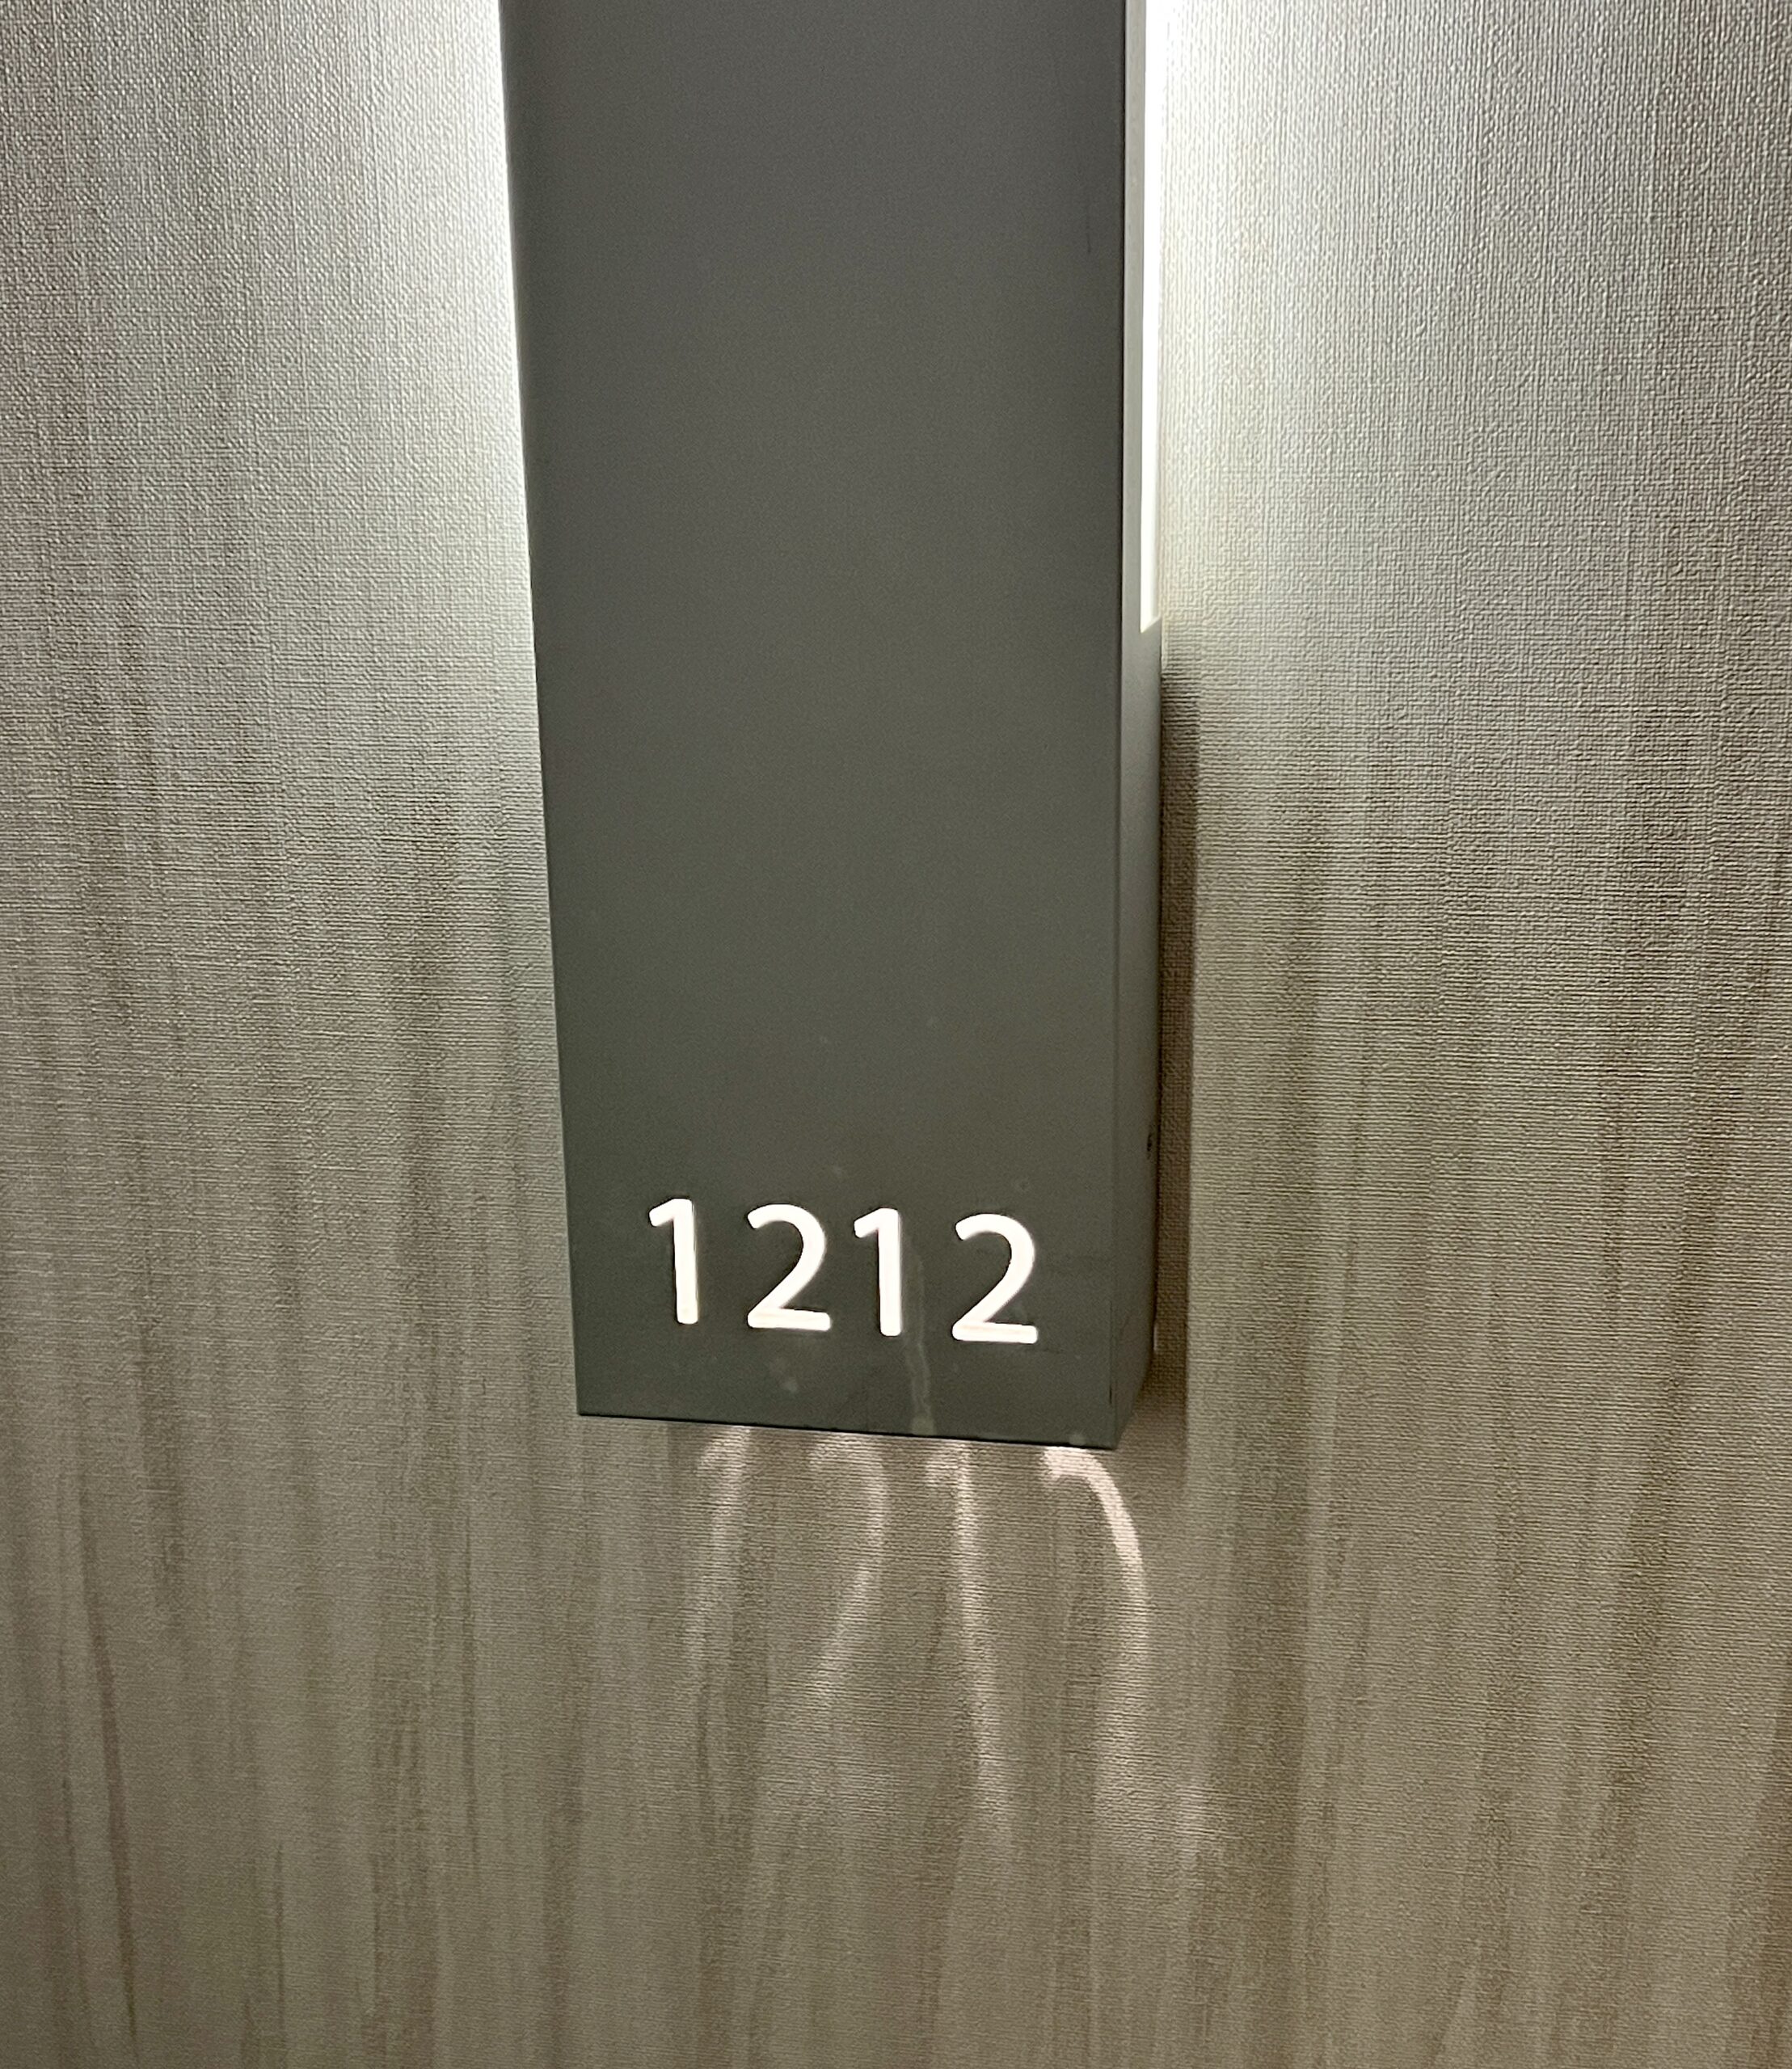 Centric Suite High Floor 1212